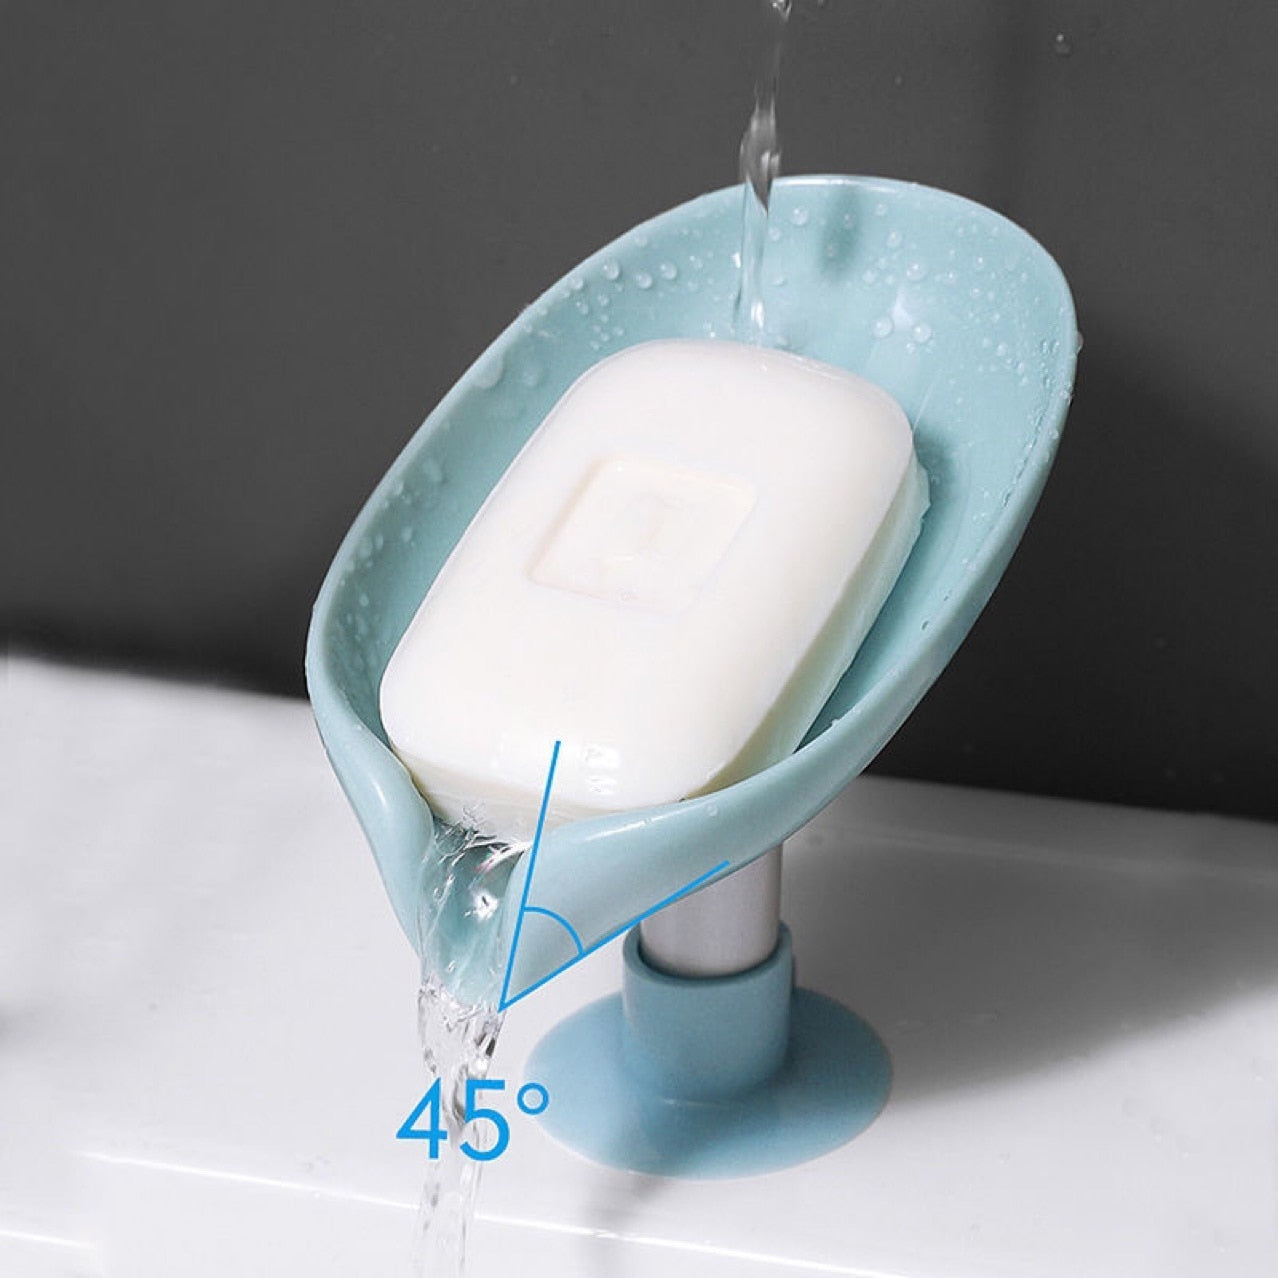 SPRING SALE  50% OFF Draining Soap Dish